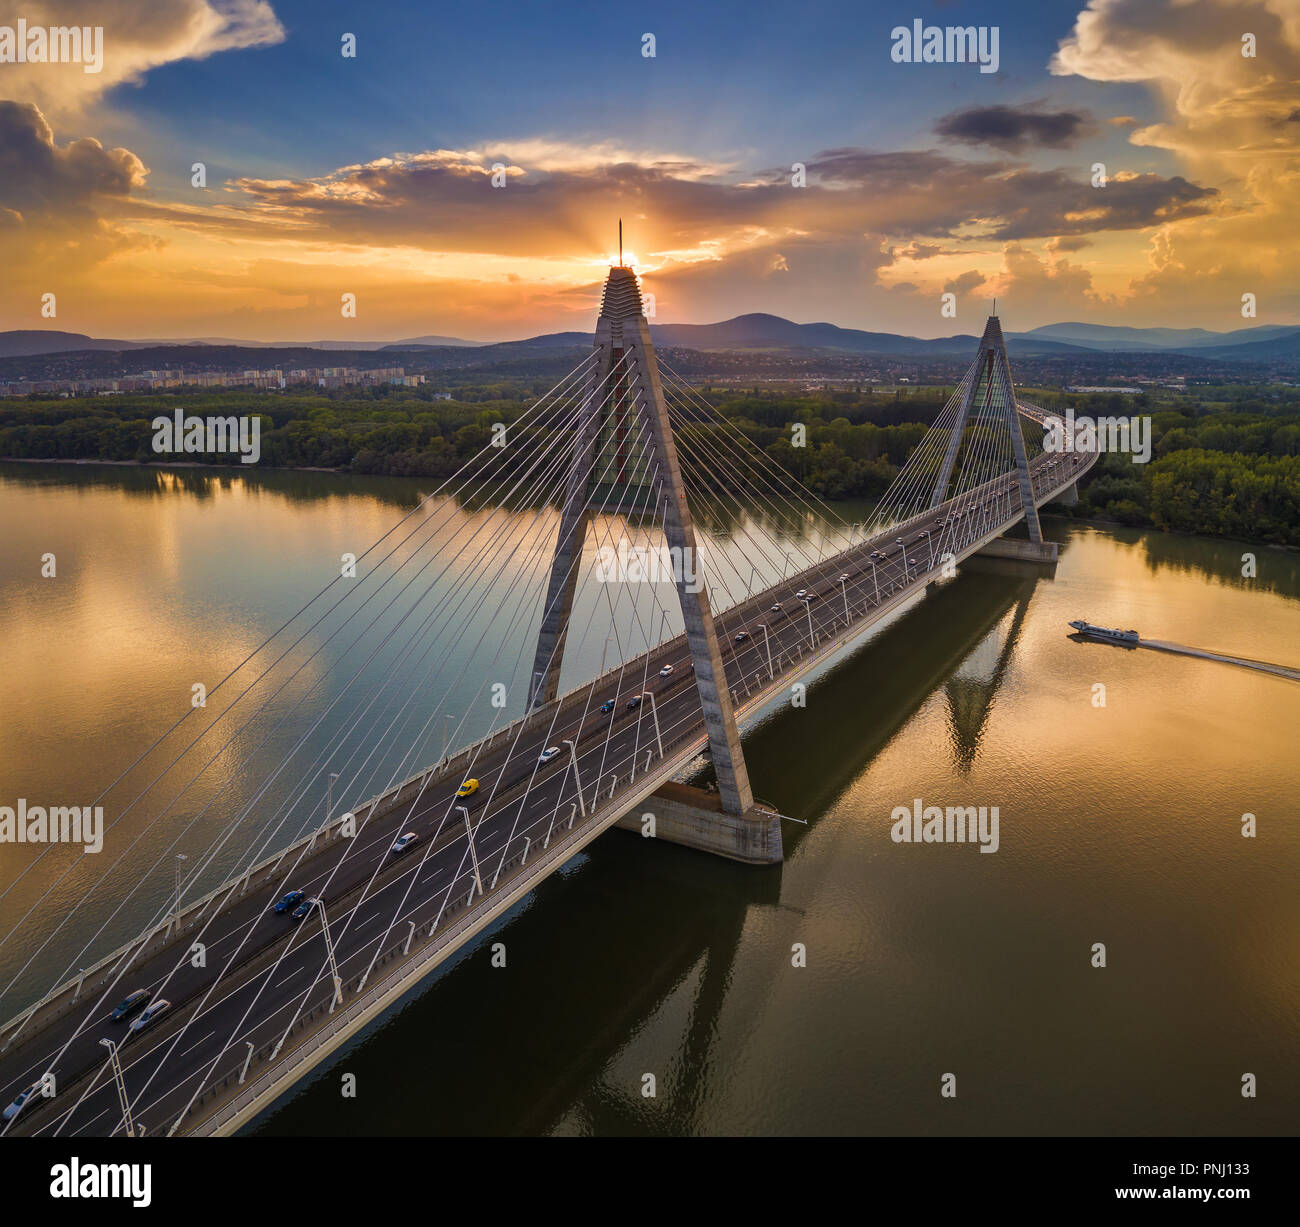 Budapest, Hungary - Megyeri Bridge at sunset with speedboat on River Danube and heavy traffic and beautiful blue & orange sky Stock Photo